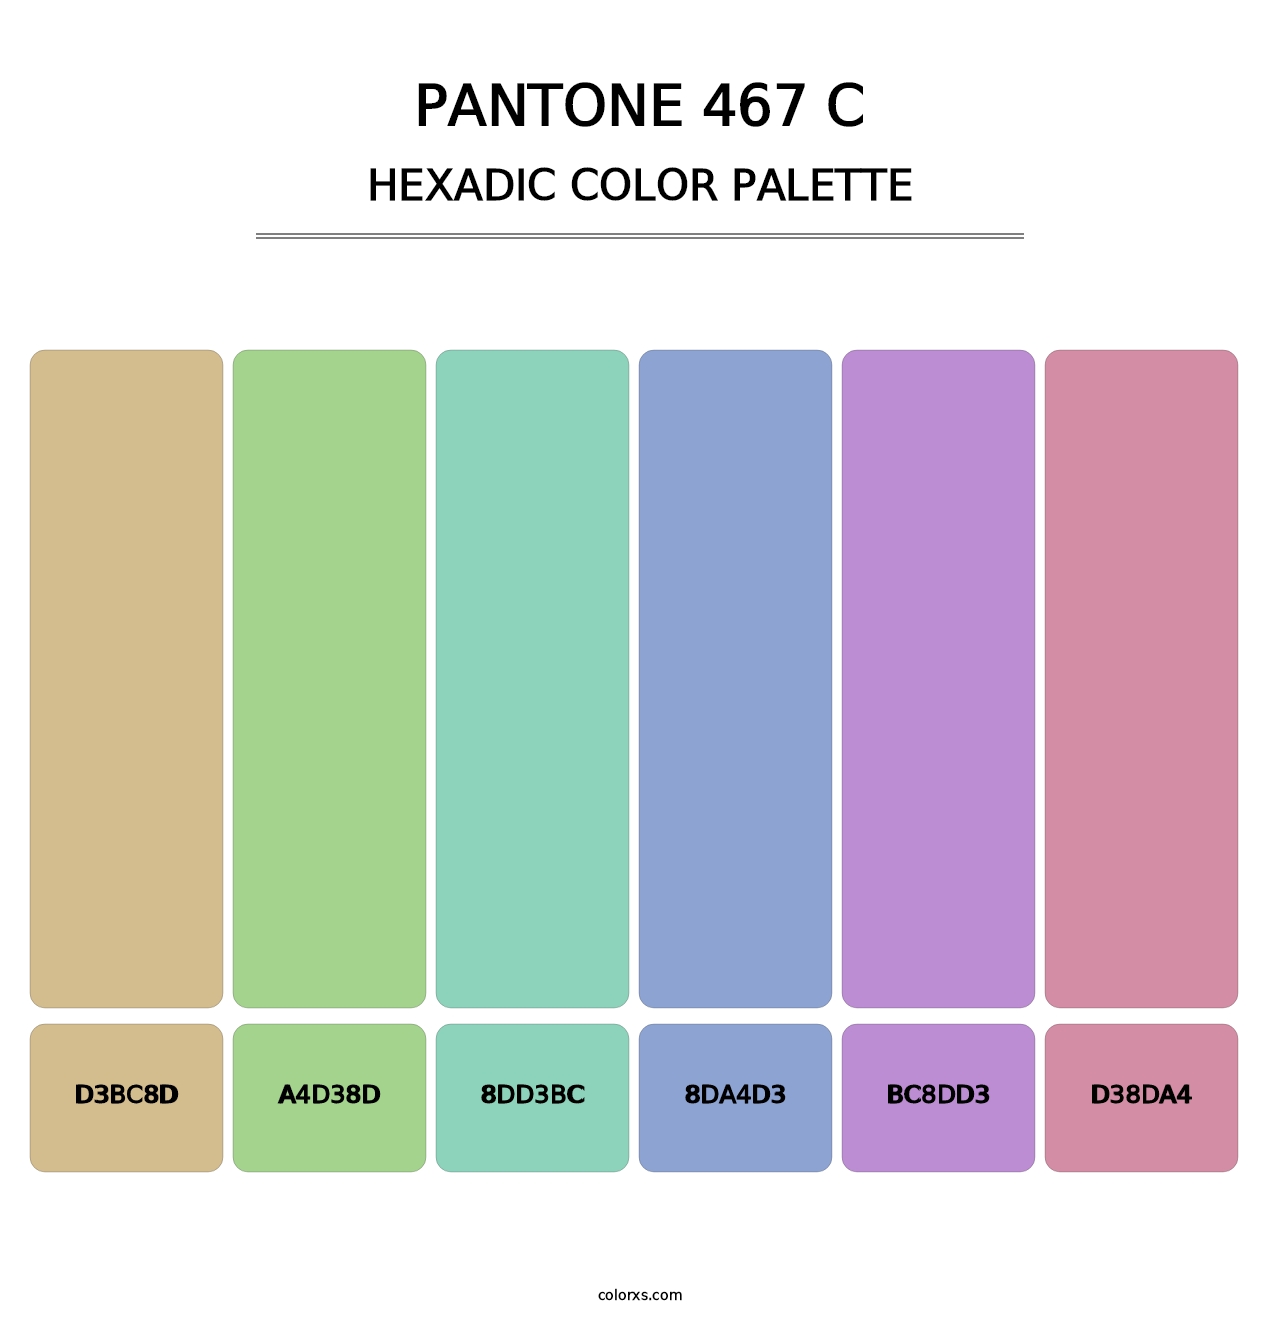 PANTONE 467 C - Hexadic Color Palette